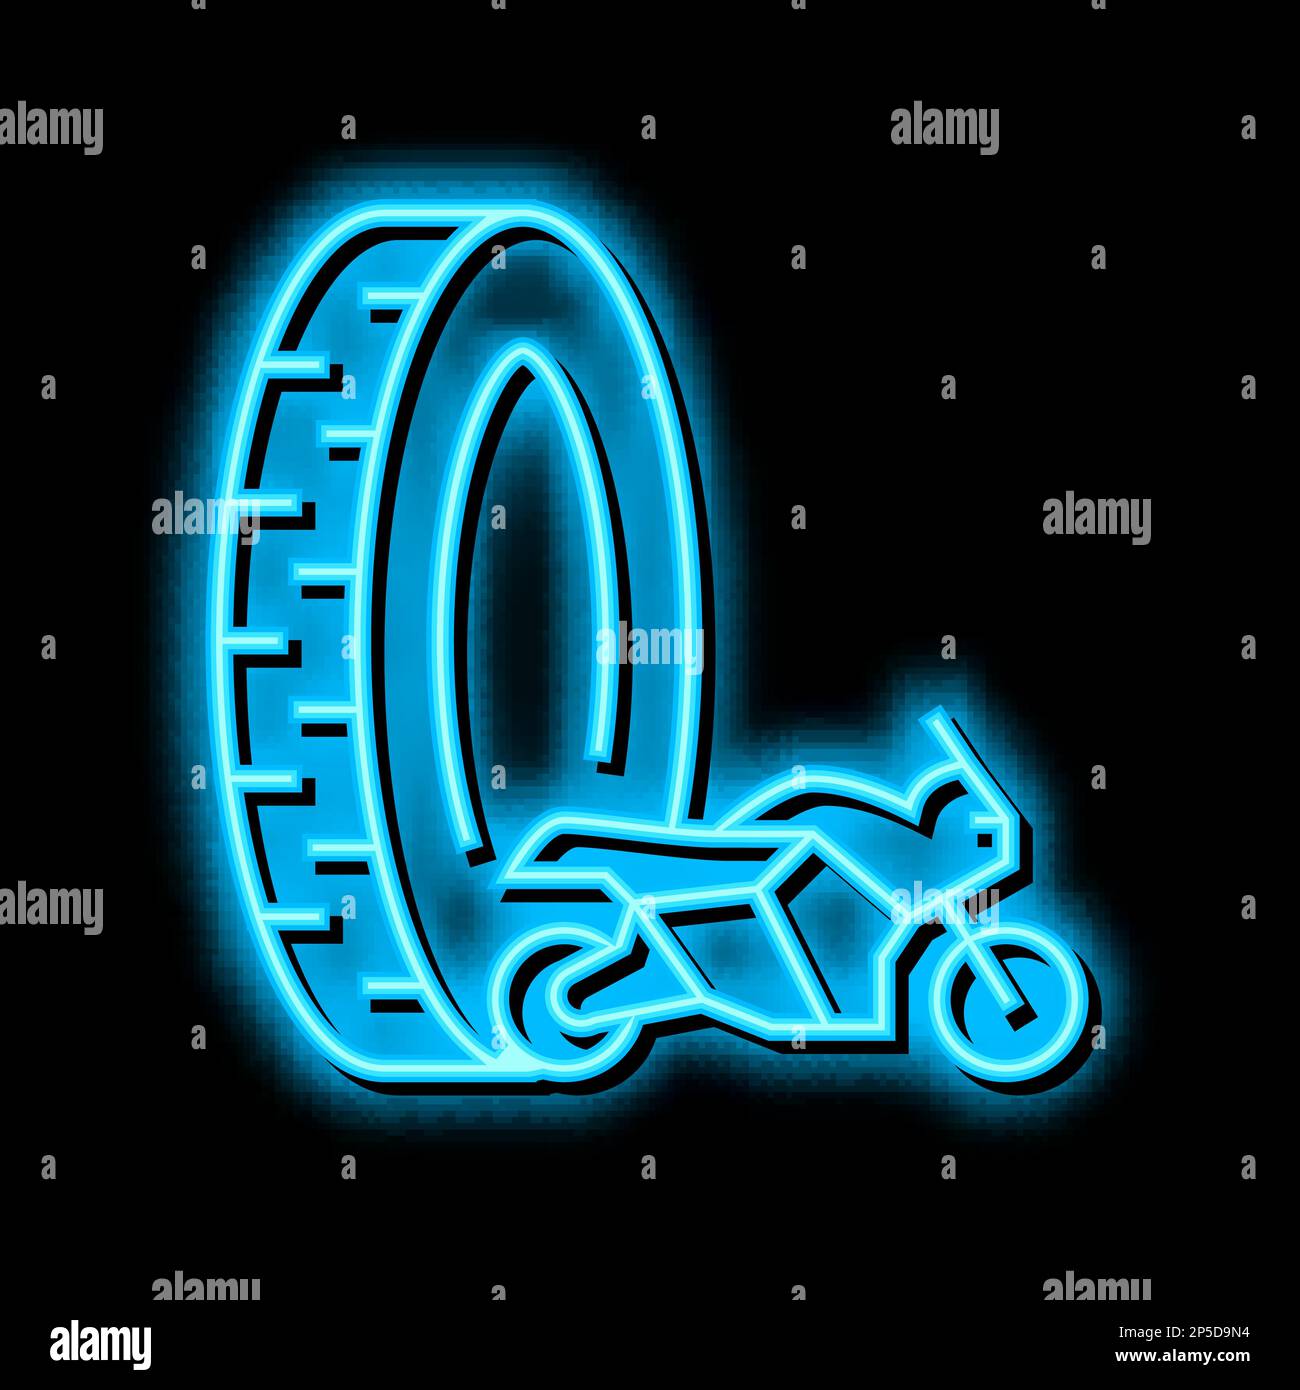 motorcycle tires neon glow icon illustration Stock Vector